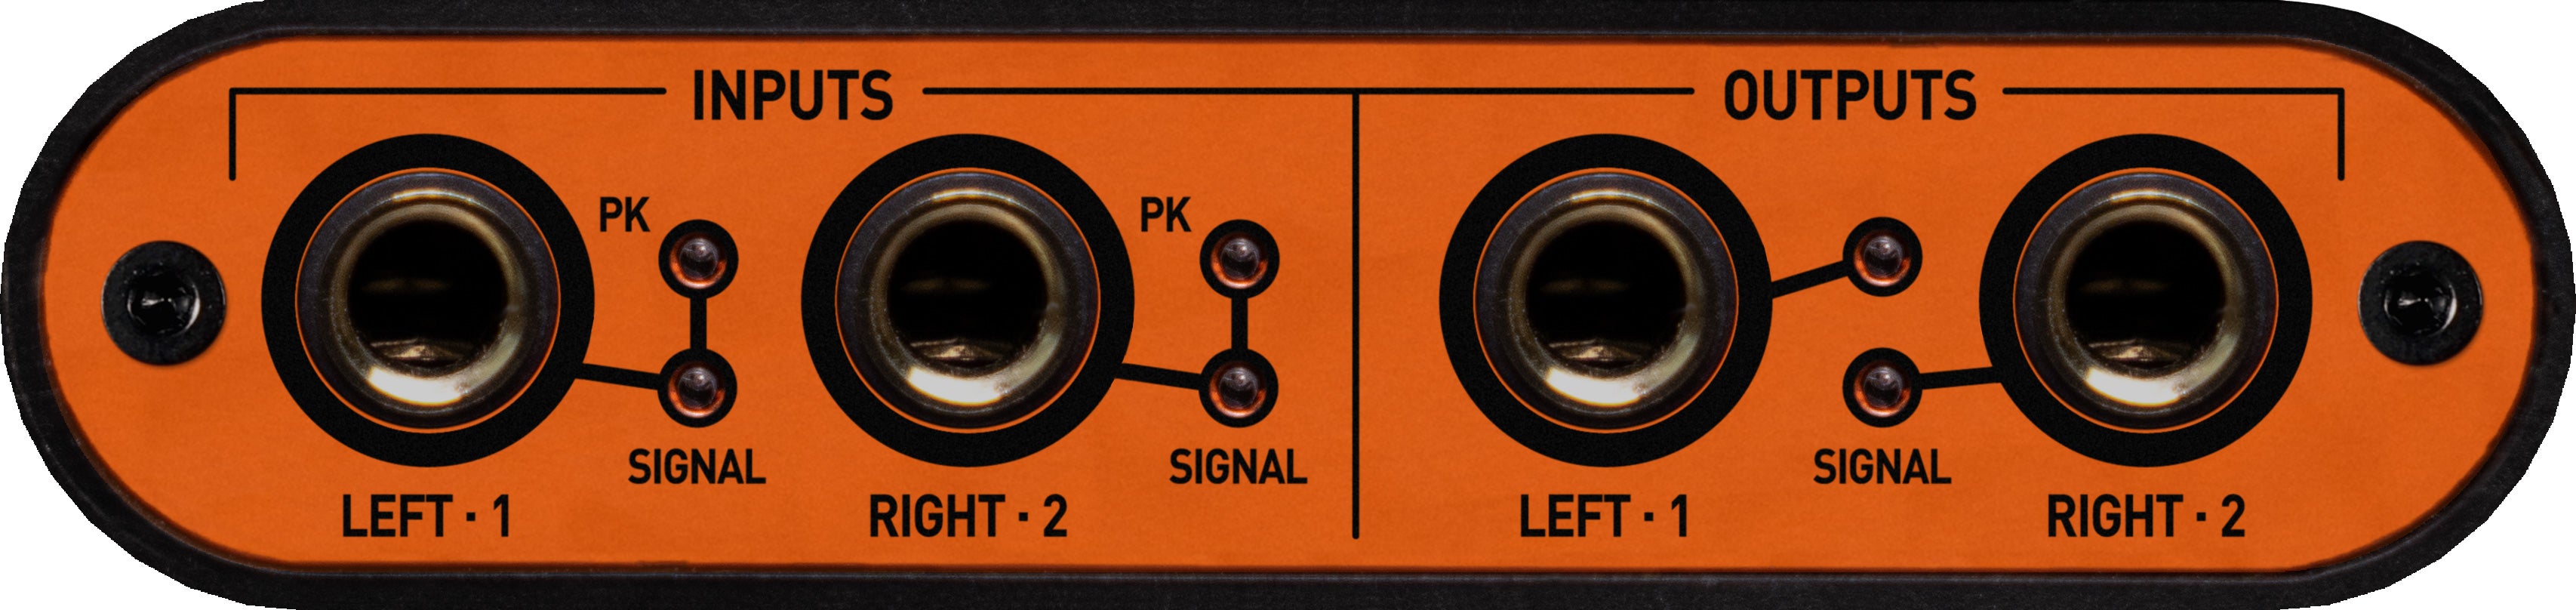 ESI Audio planet 22c - Reference Quality Dante Audio Interface - Black/Orange